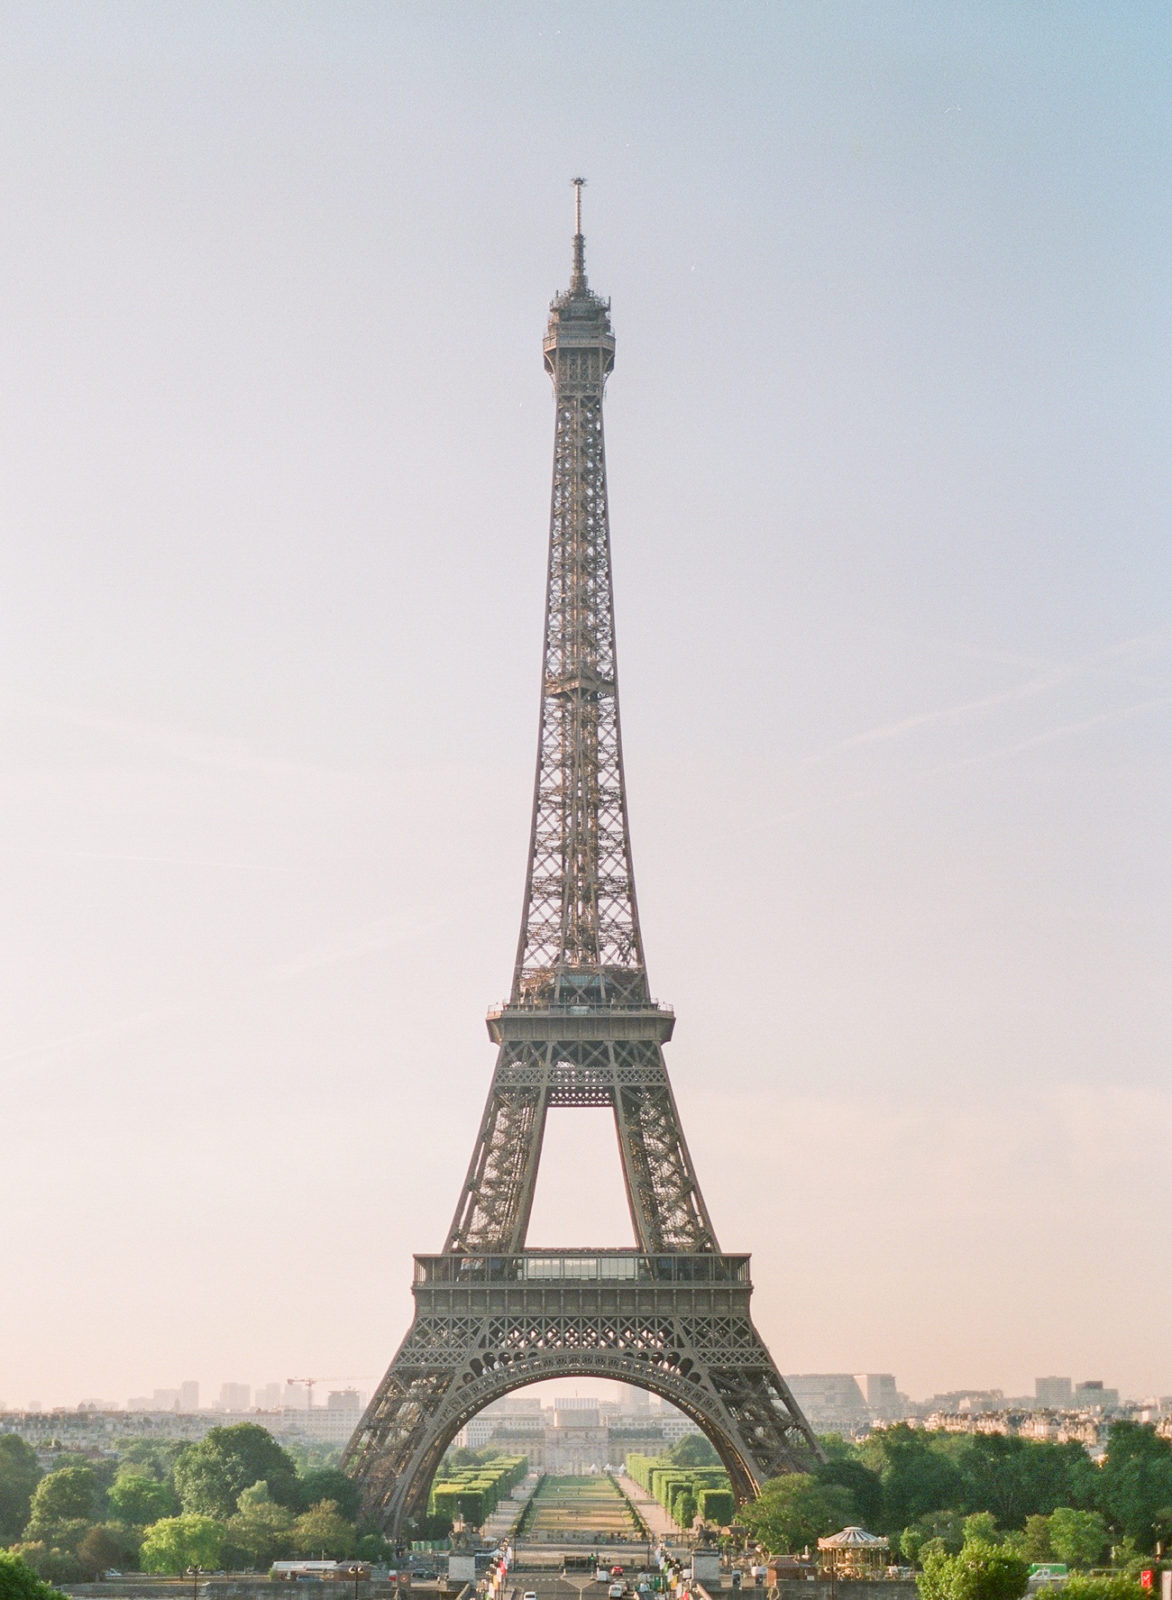 Musee Rodin Wedding Photographer | Paris Garden Wedding Photography | Paris Film Photographer | France Wedding Photography | Molly Carr Photography | Paris Outdoor Wedding | Eiffel Tower